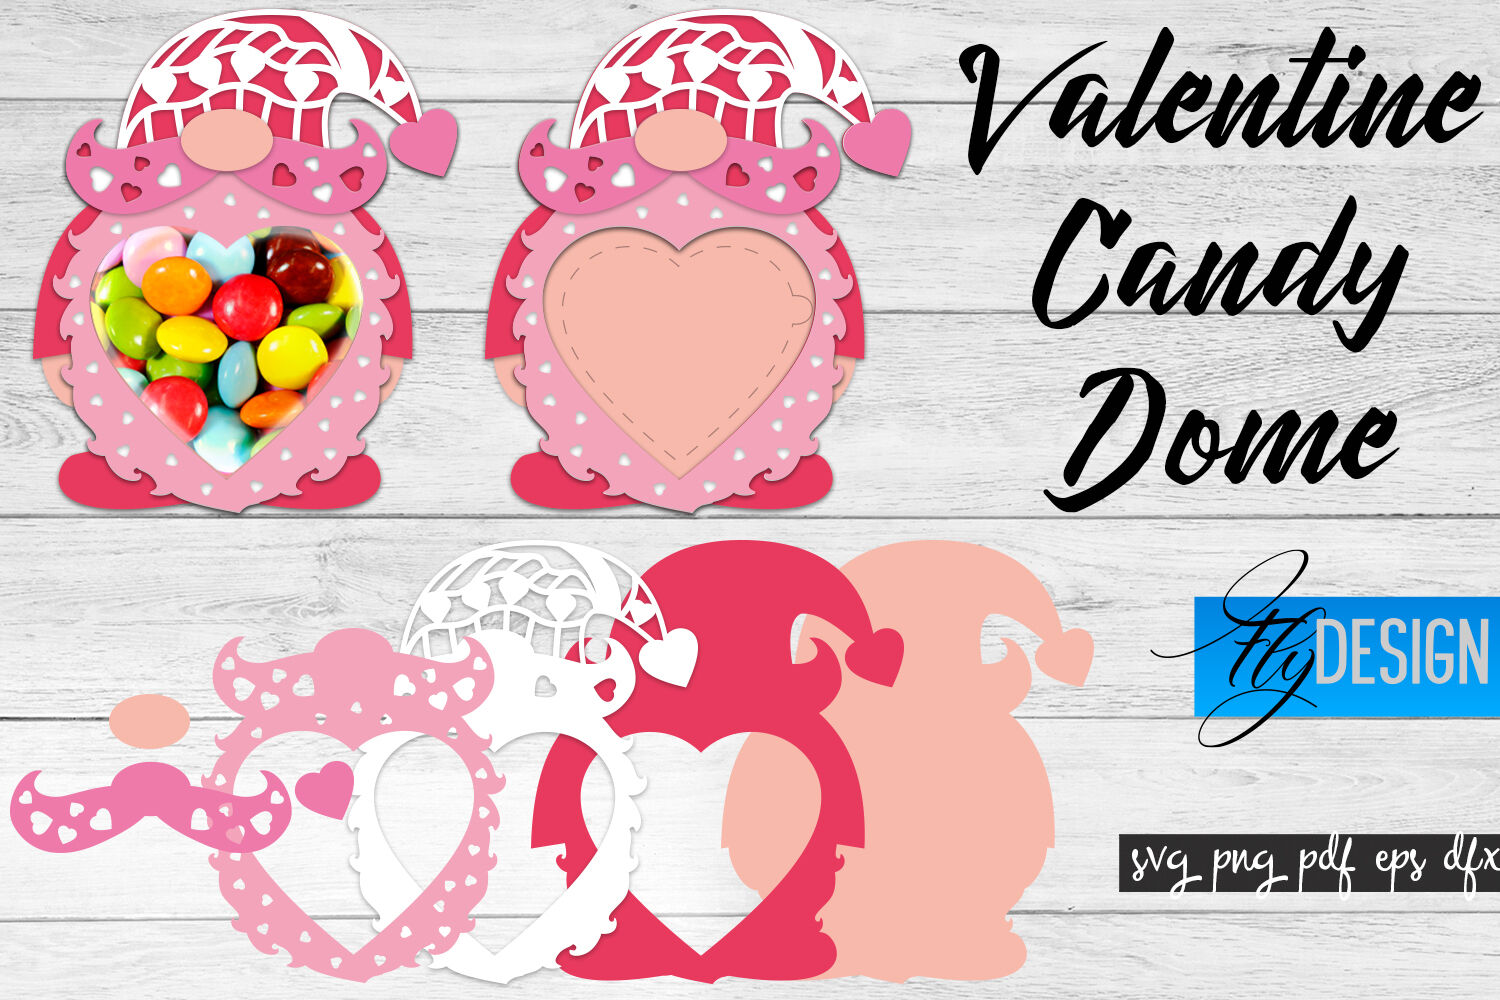 Valentine Candy Dome SVG | Candy Holders SVG | Treat Box SVG By Fly